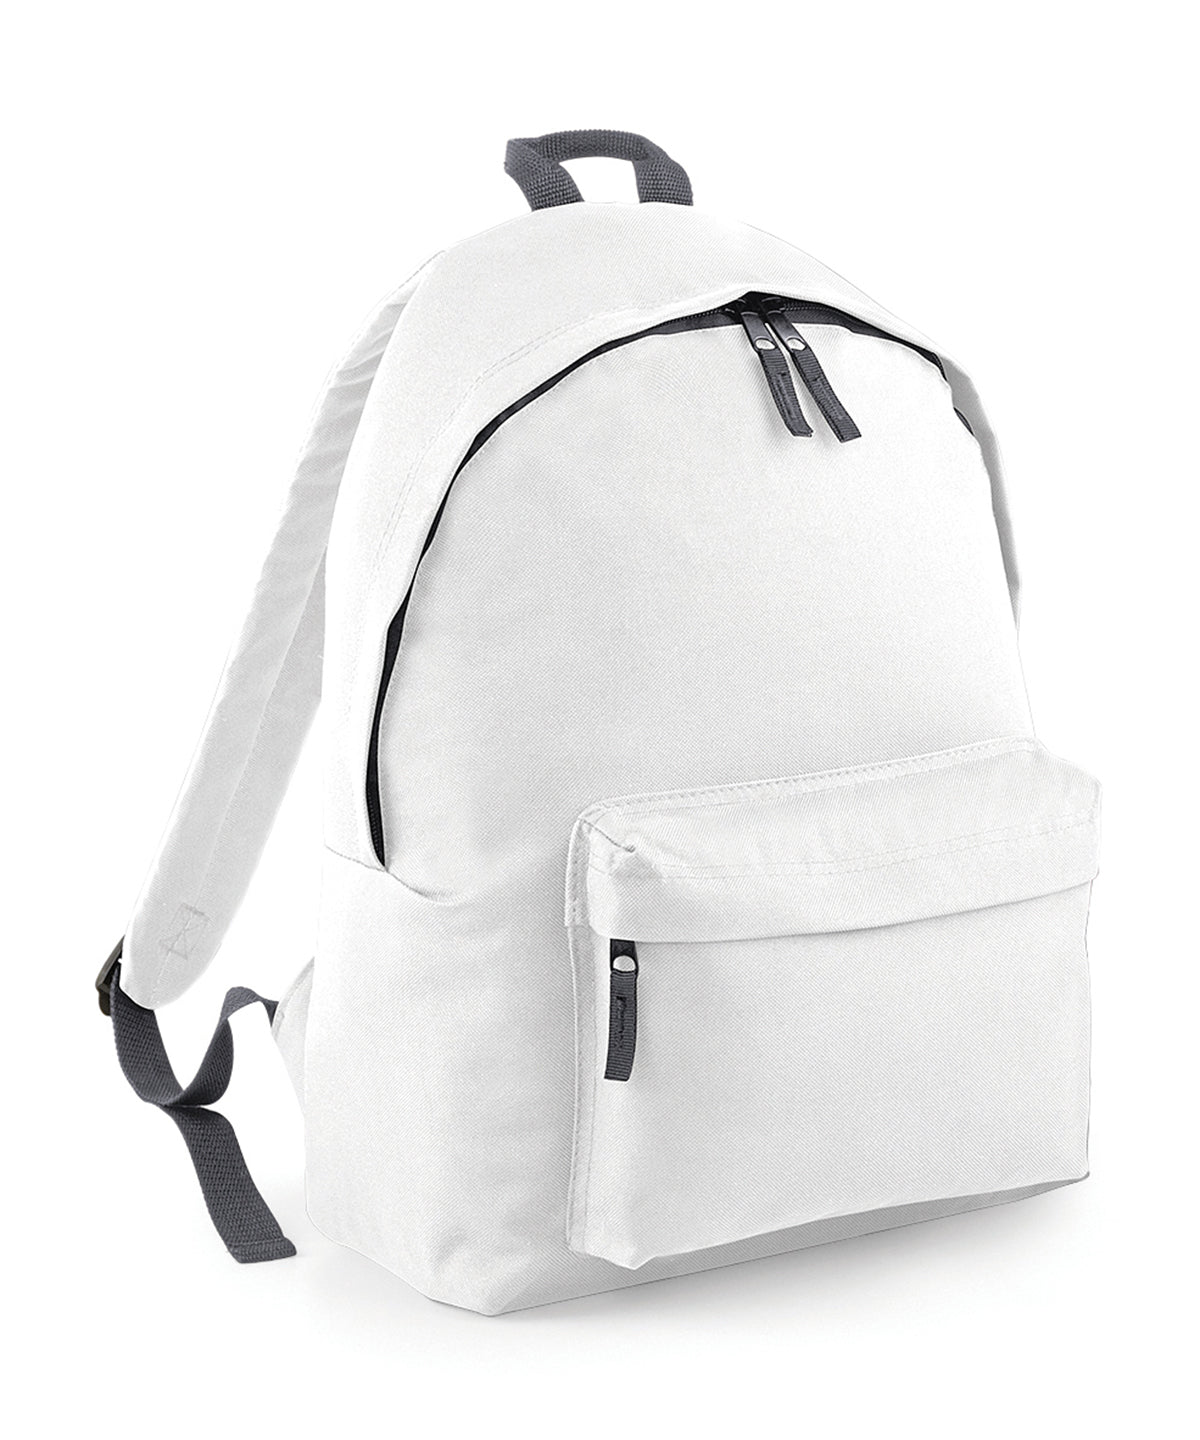 Töskur - Original Fashion Backpack